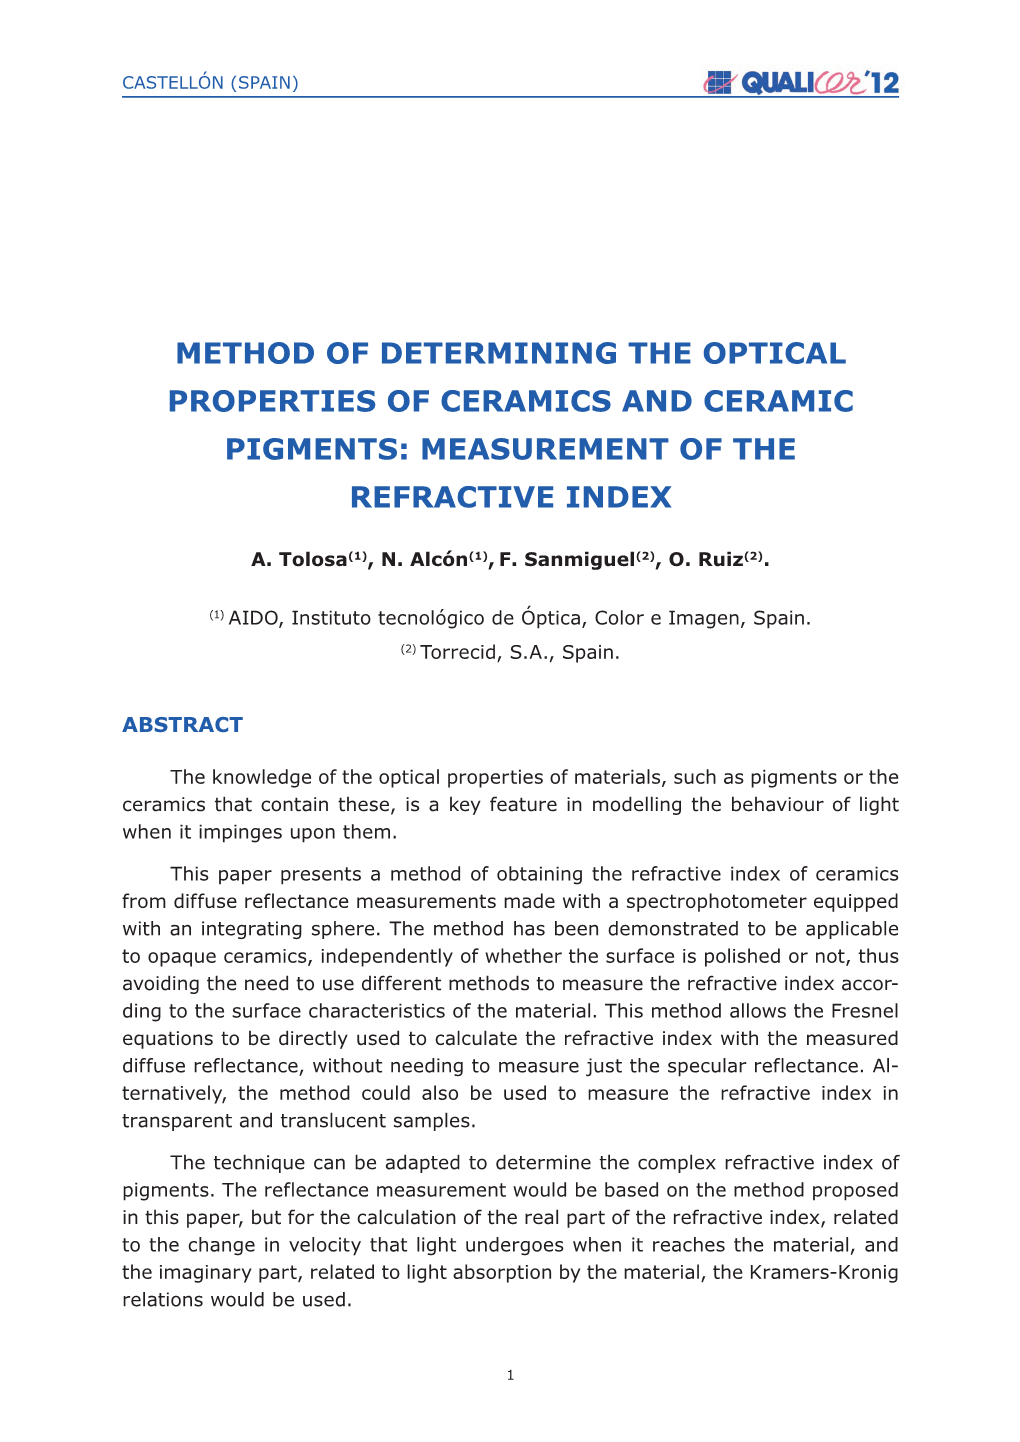 Method of Determining the Optical Properties of Ceramics and Ceramic Pigments: Measurement of the Refractive Index